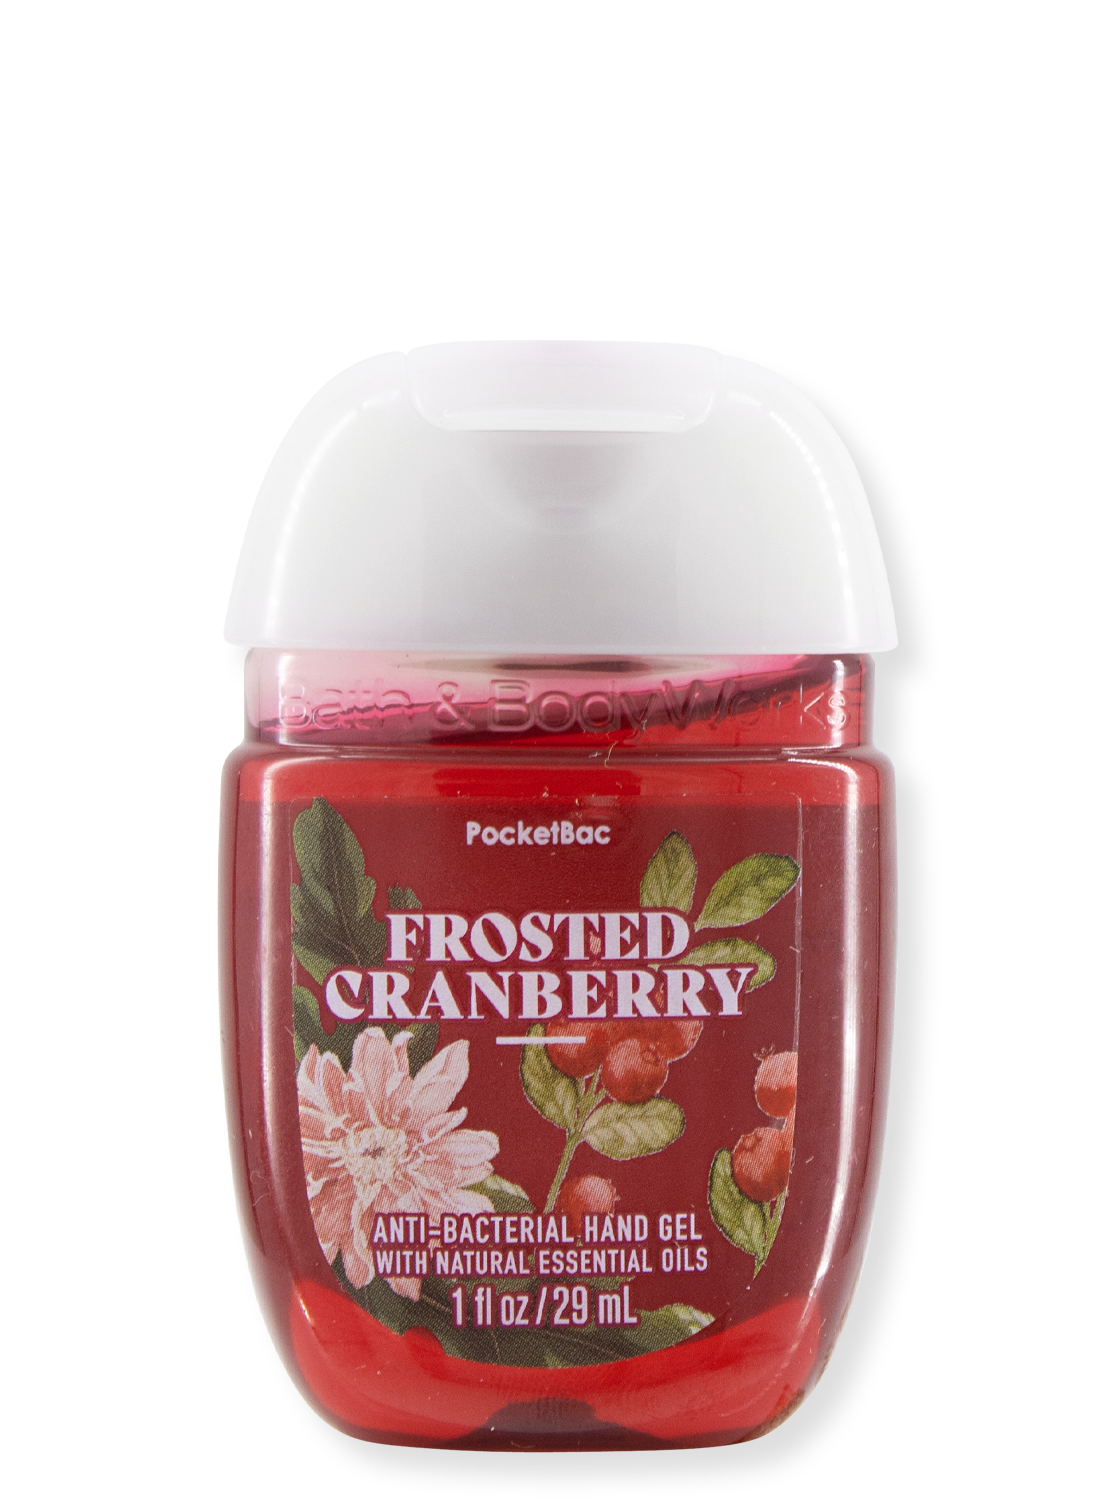 Hand-Desinfektionsgel - Frosted Cranberry - 29ml